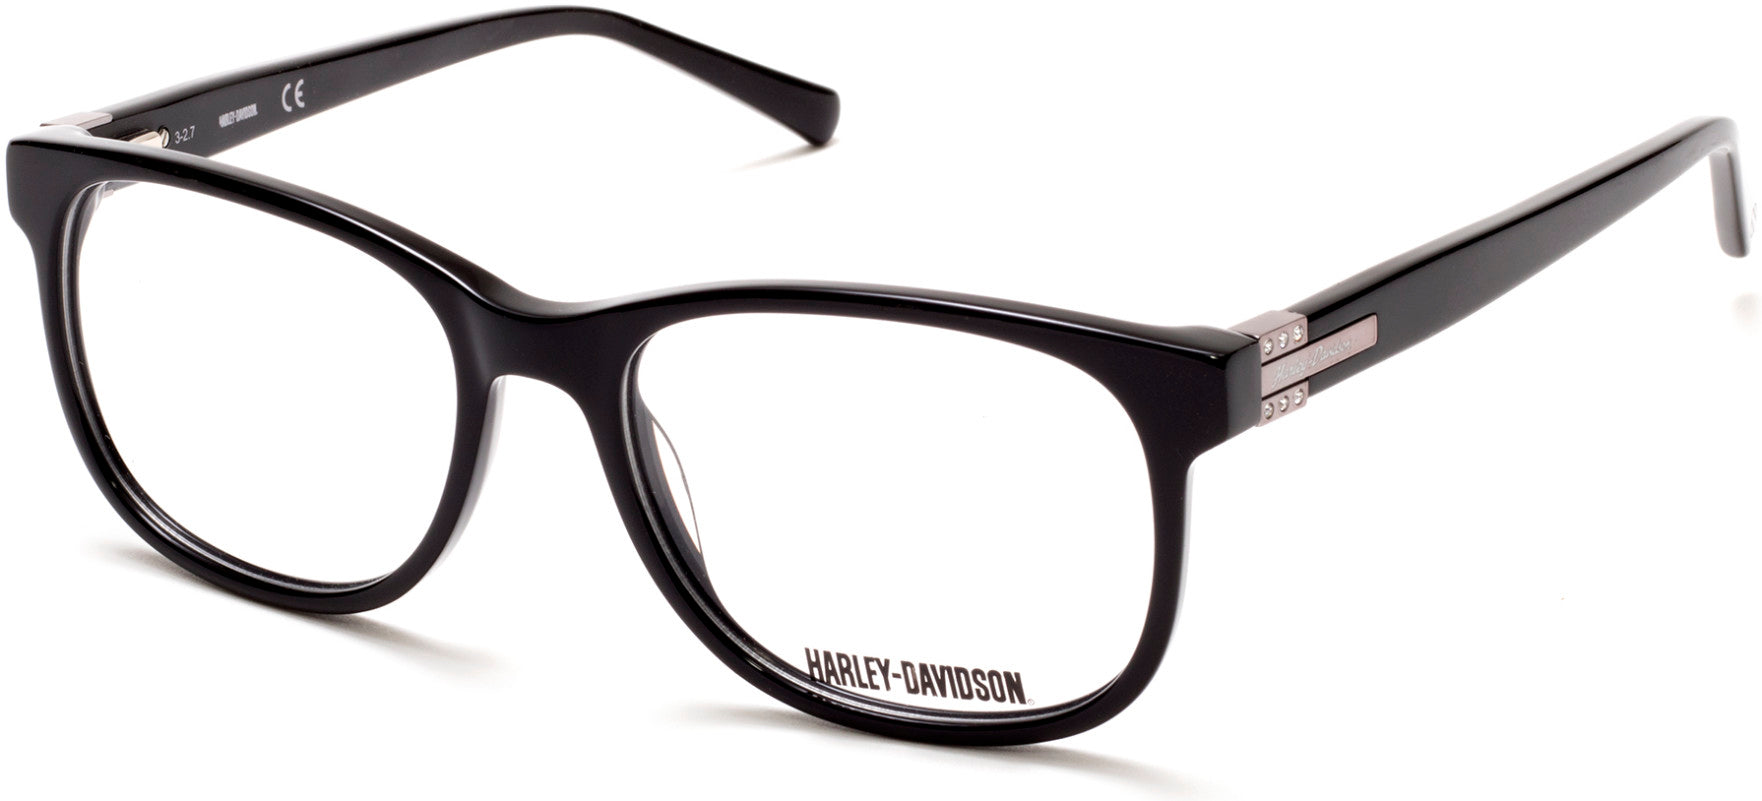 Harley-Davidson HD0546 Geometric Eyeglasses 001-001 - Shiny Black